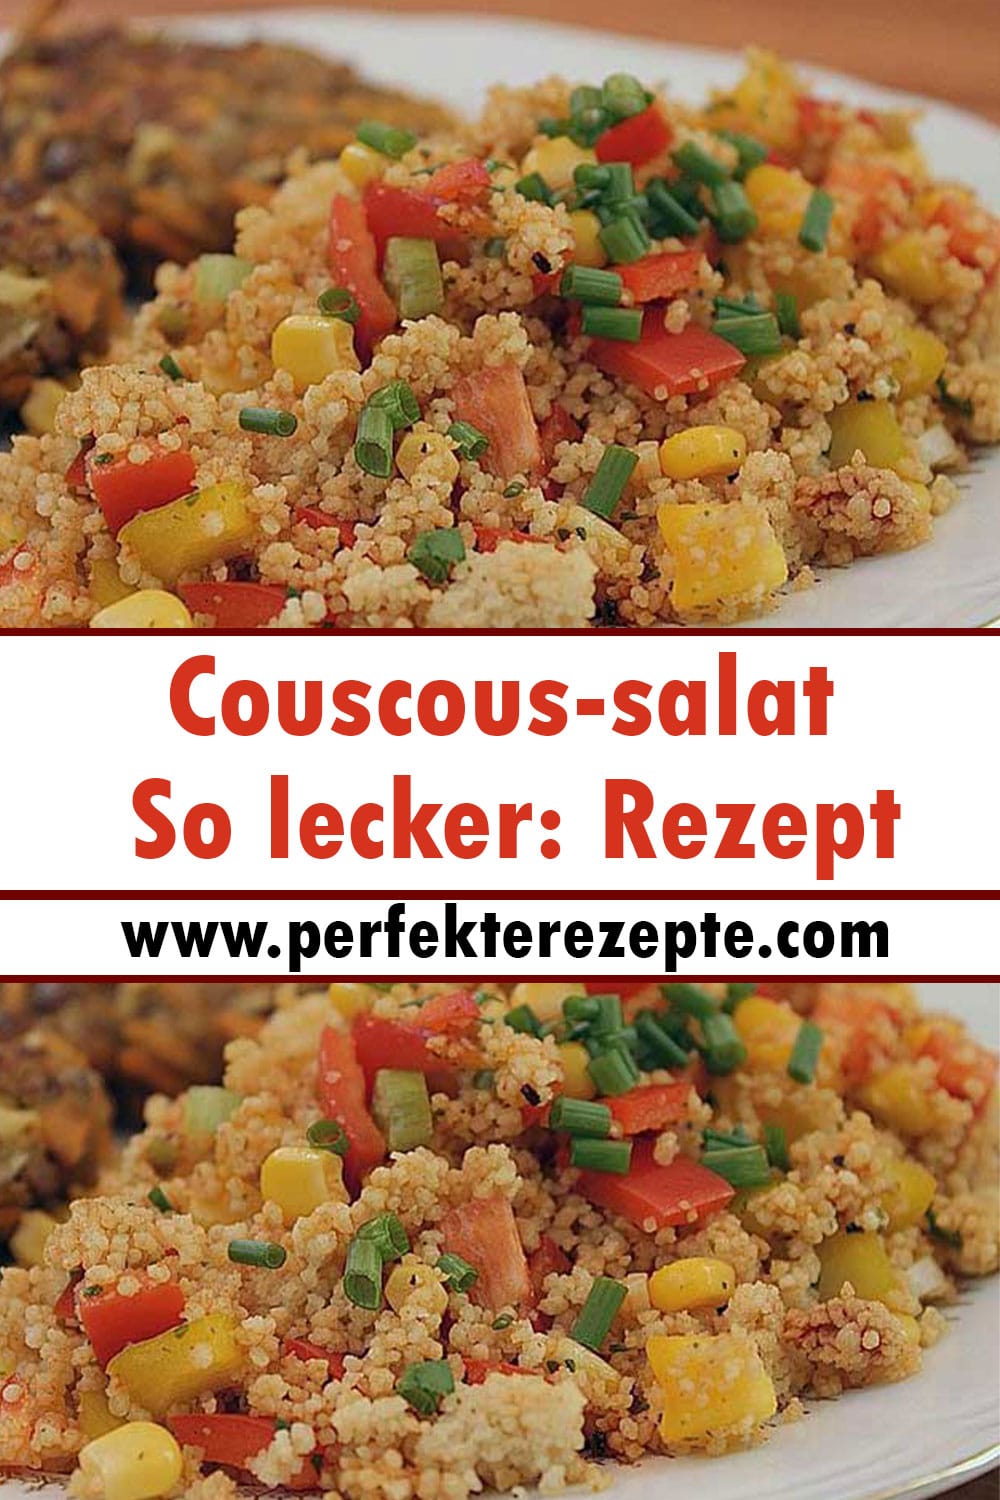 Couscous-salat Rezept: So lecker